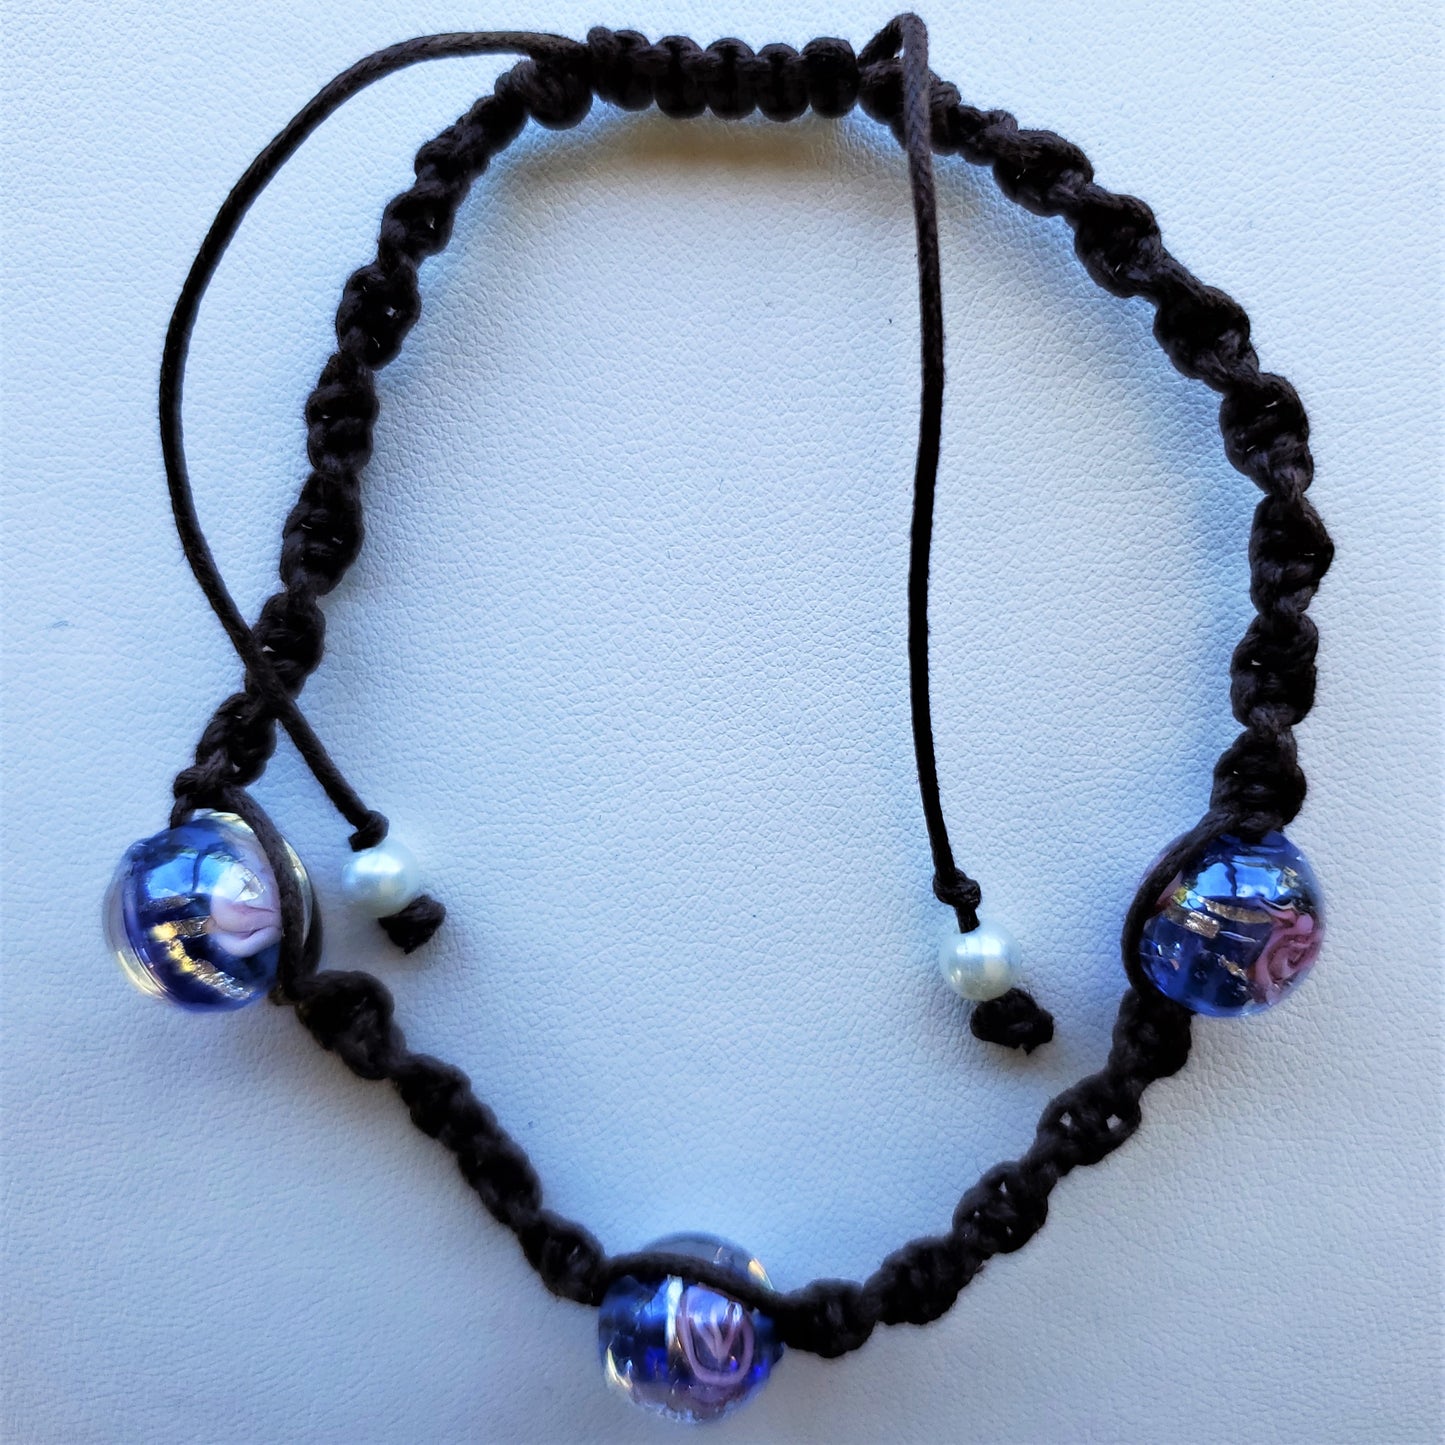 Hand Braided Macramé & Recycled Glass Bead Bracelet - Blue & Pink